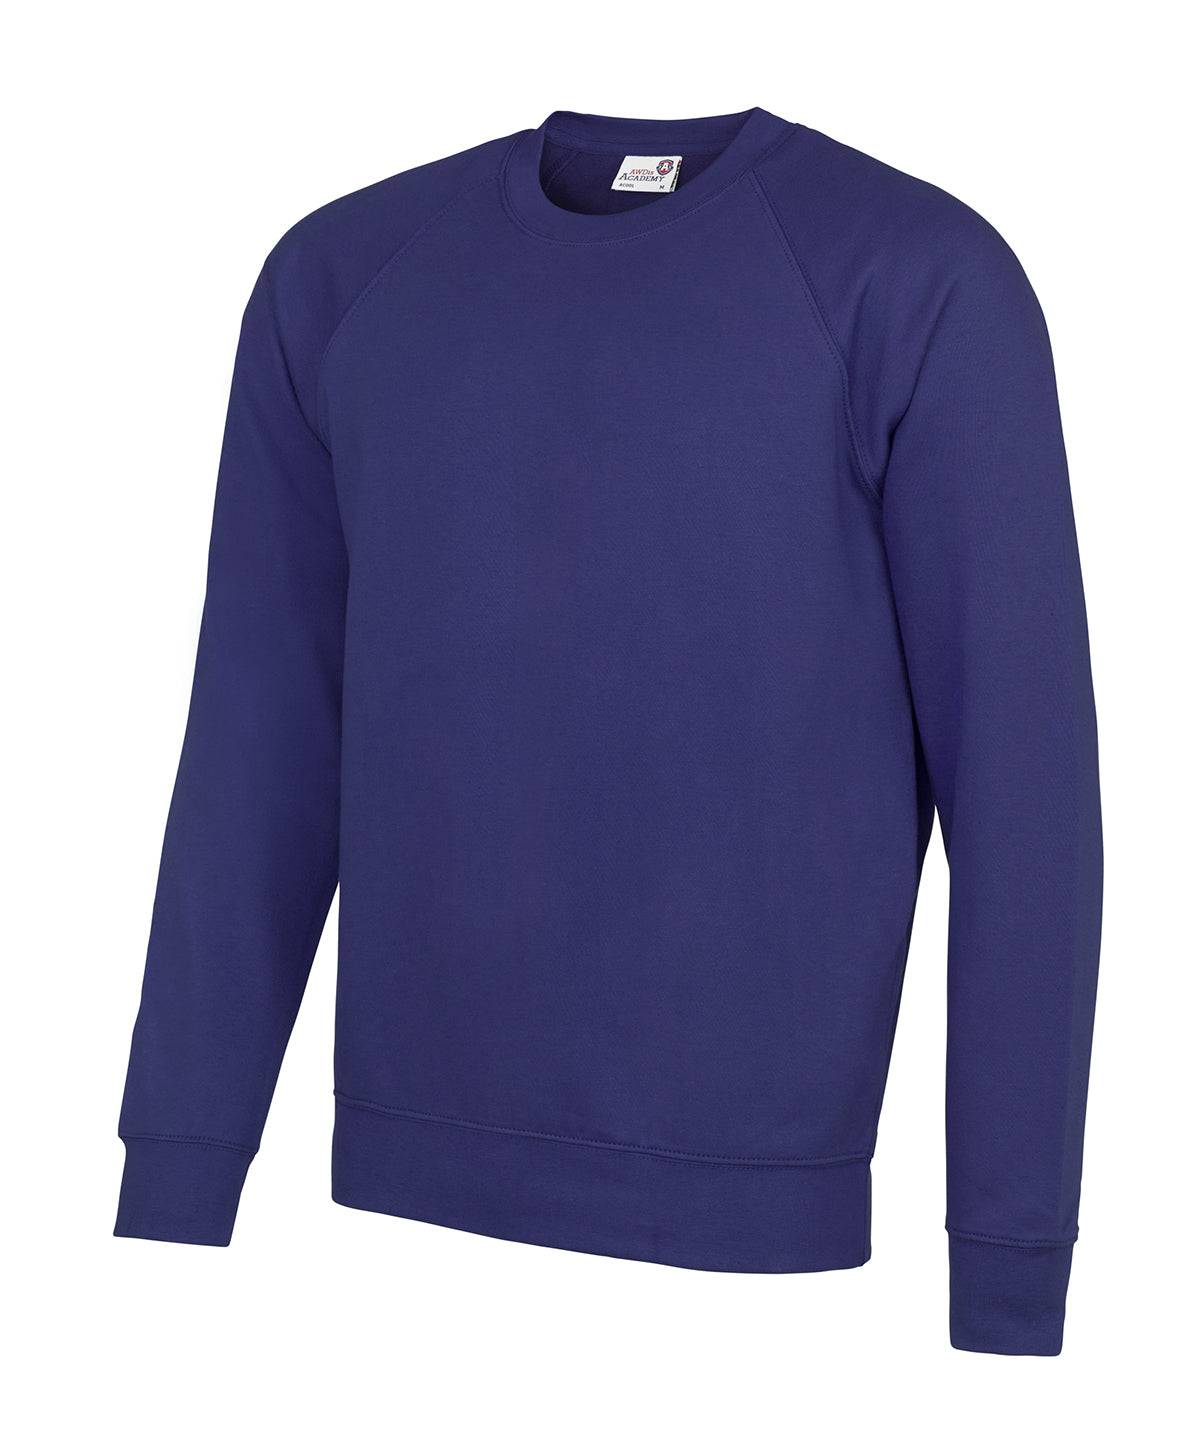 Academy Purple - Senior Academy raglan sweatshirt